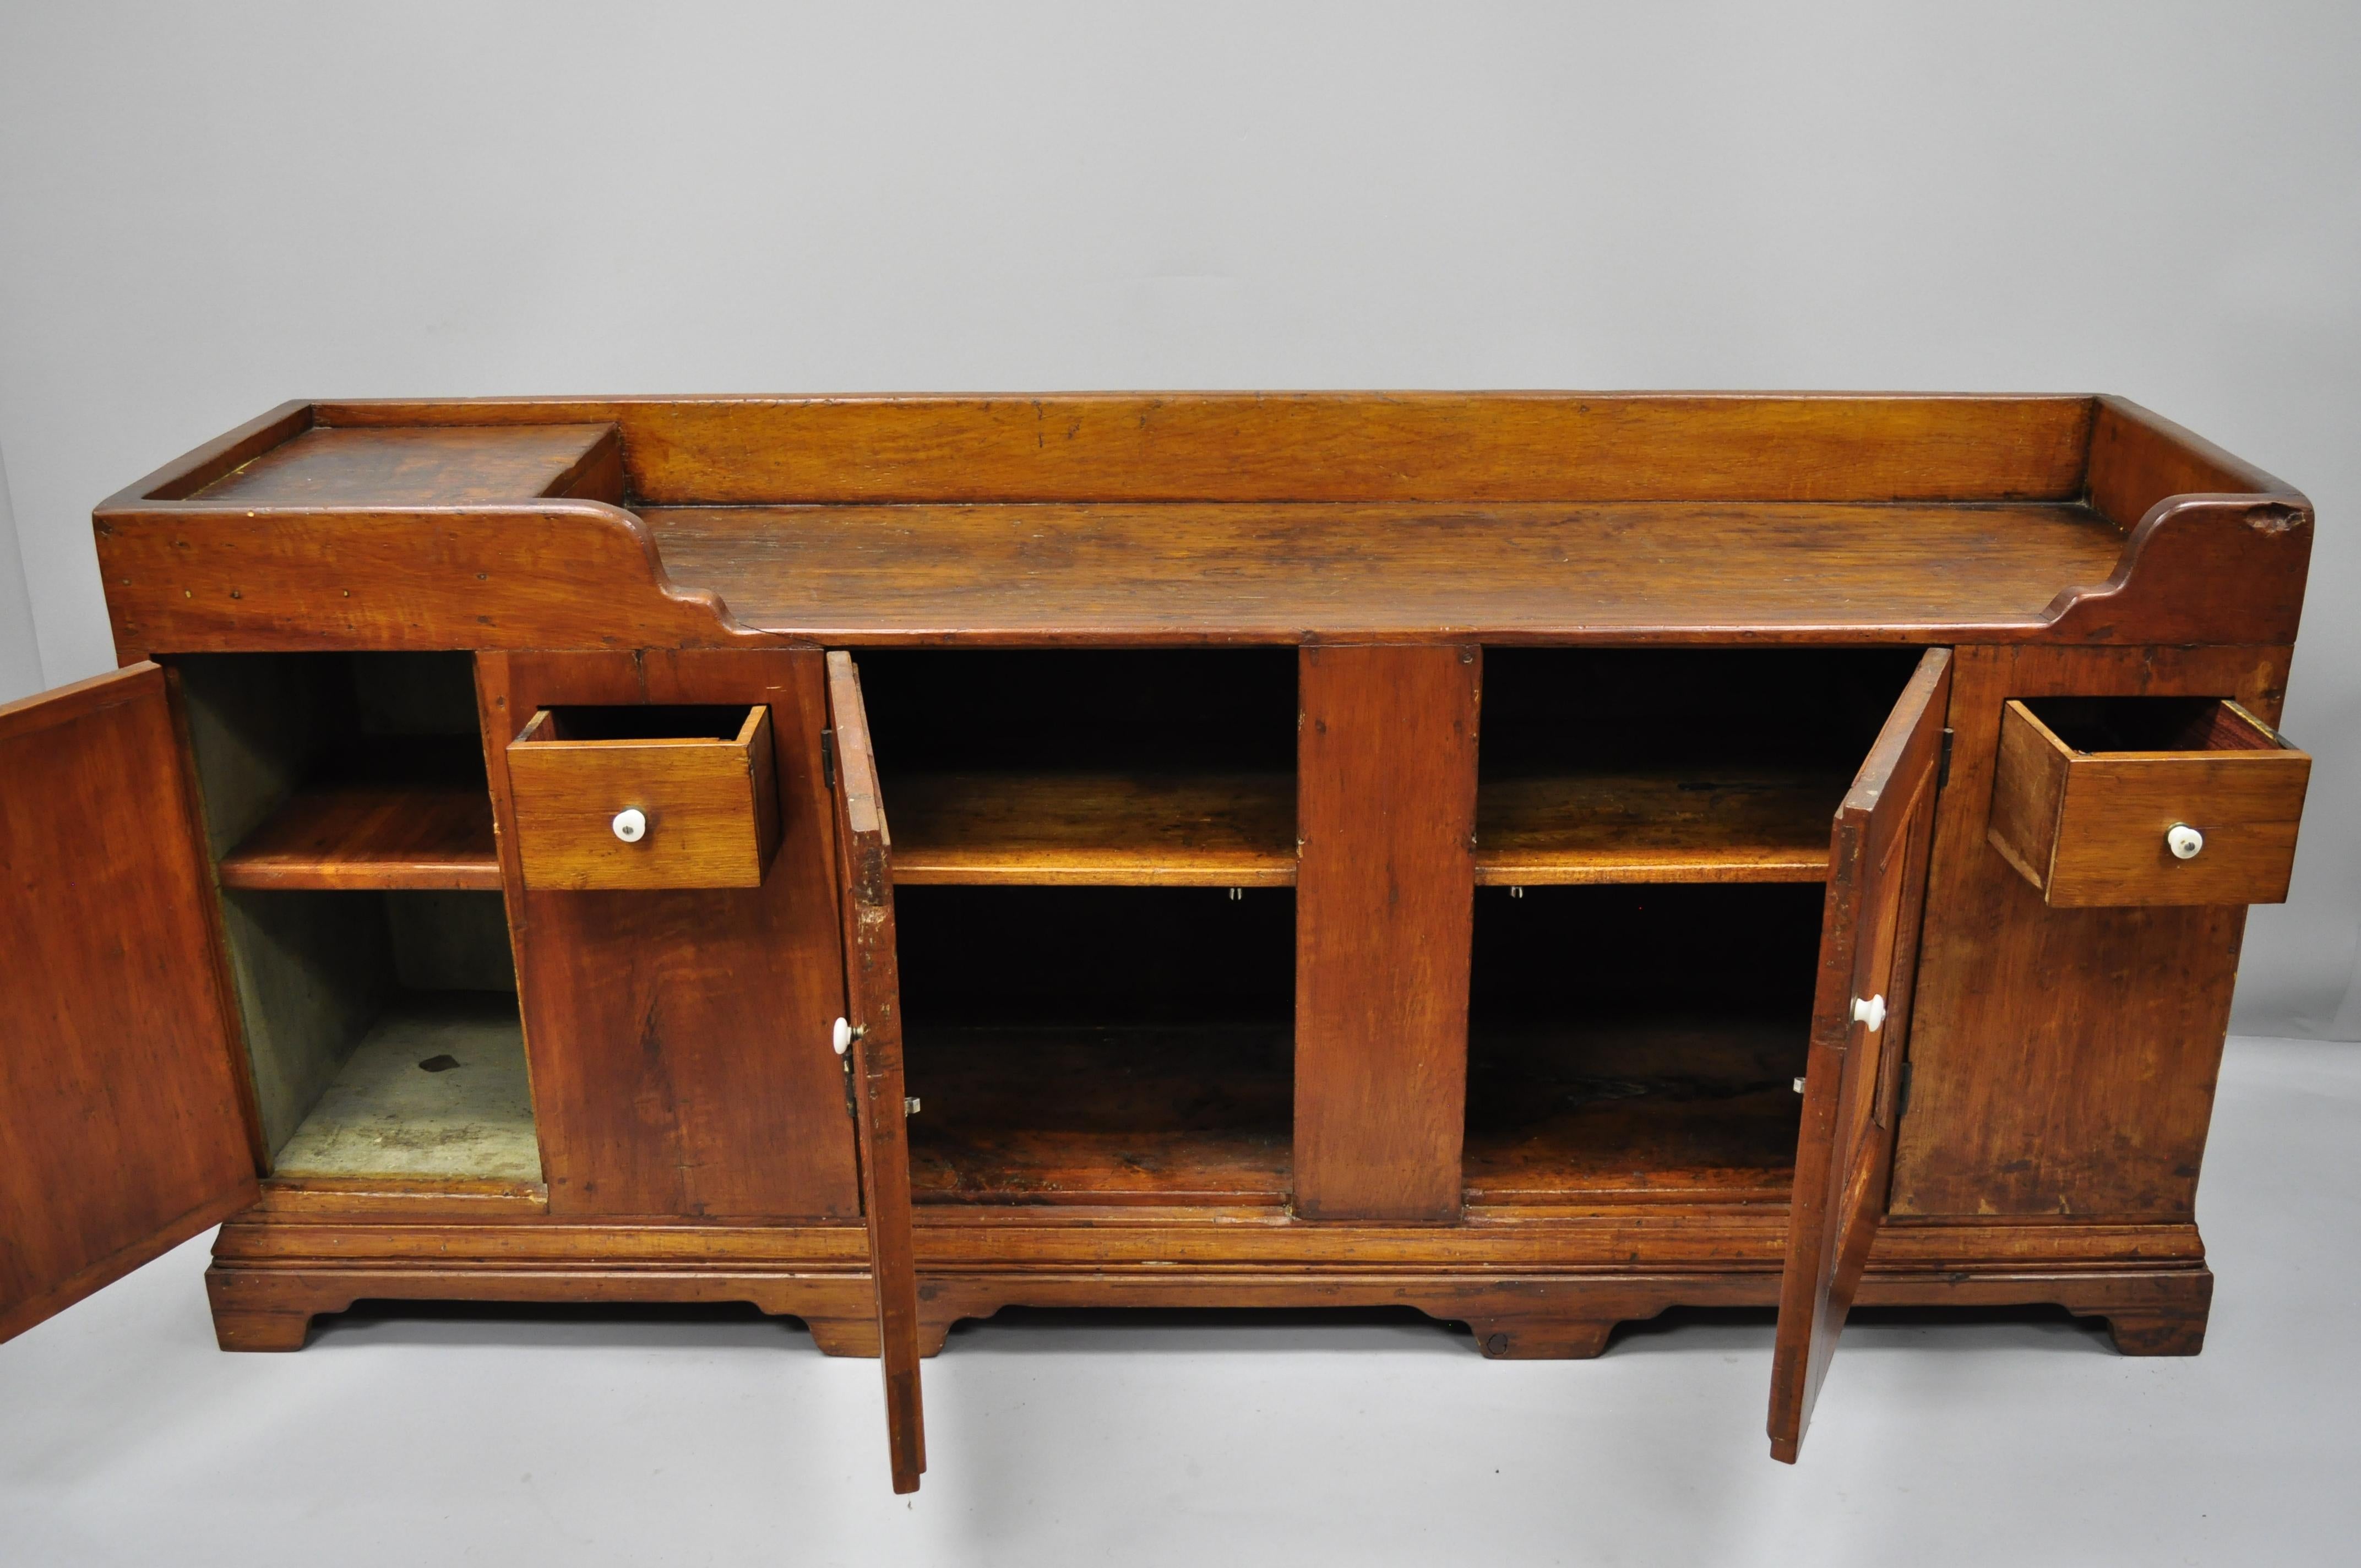 19th Century Pine Wood Primitive Long Dry Sink Cupboard Cabinet Sideboard Buffet 2